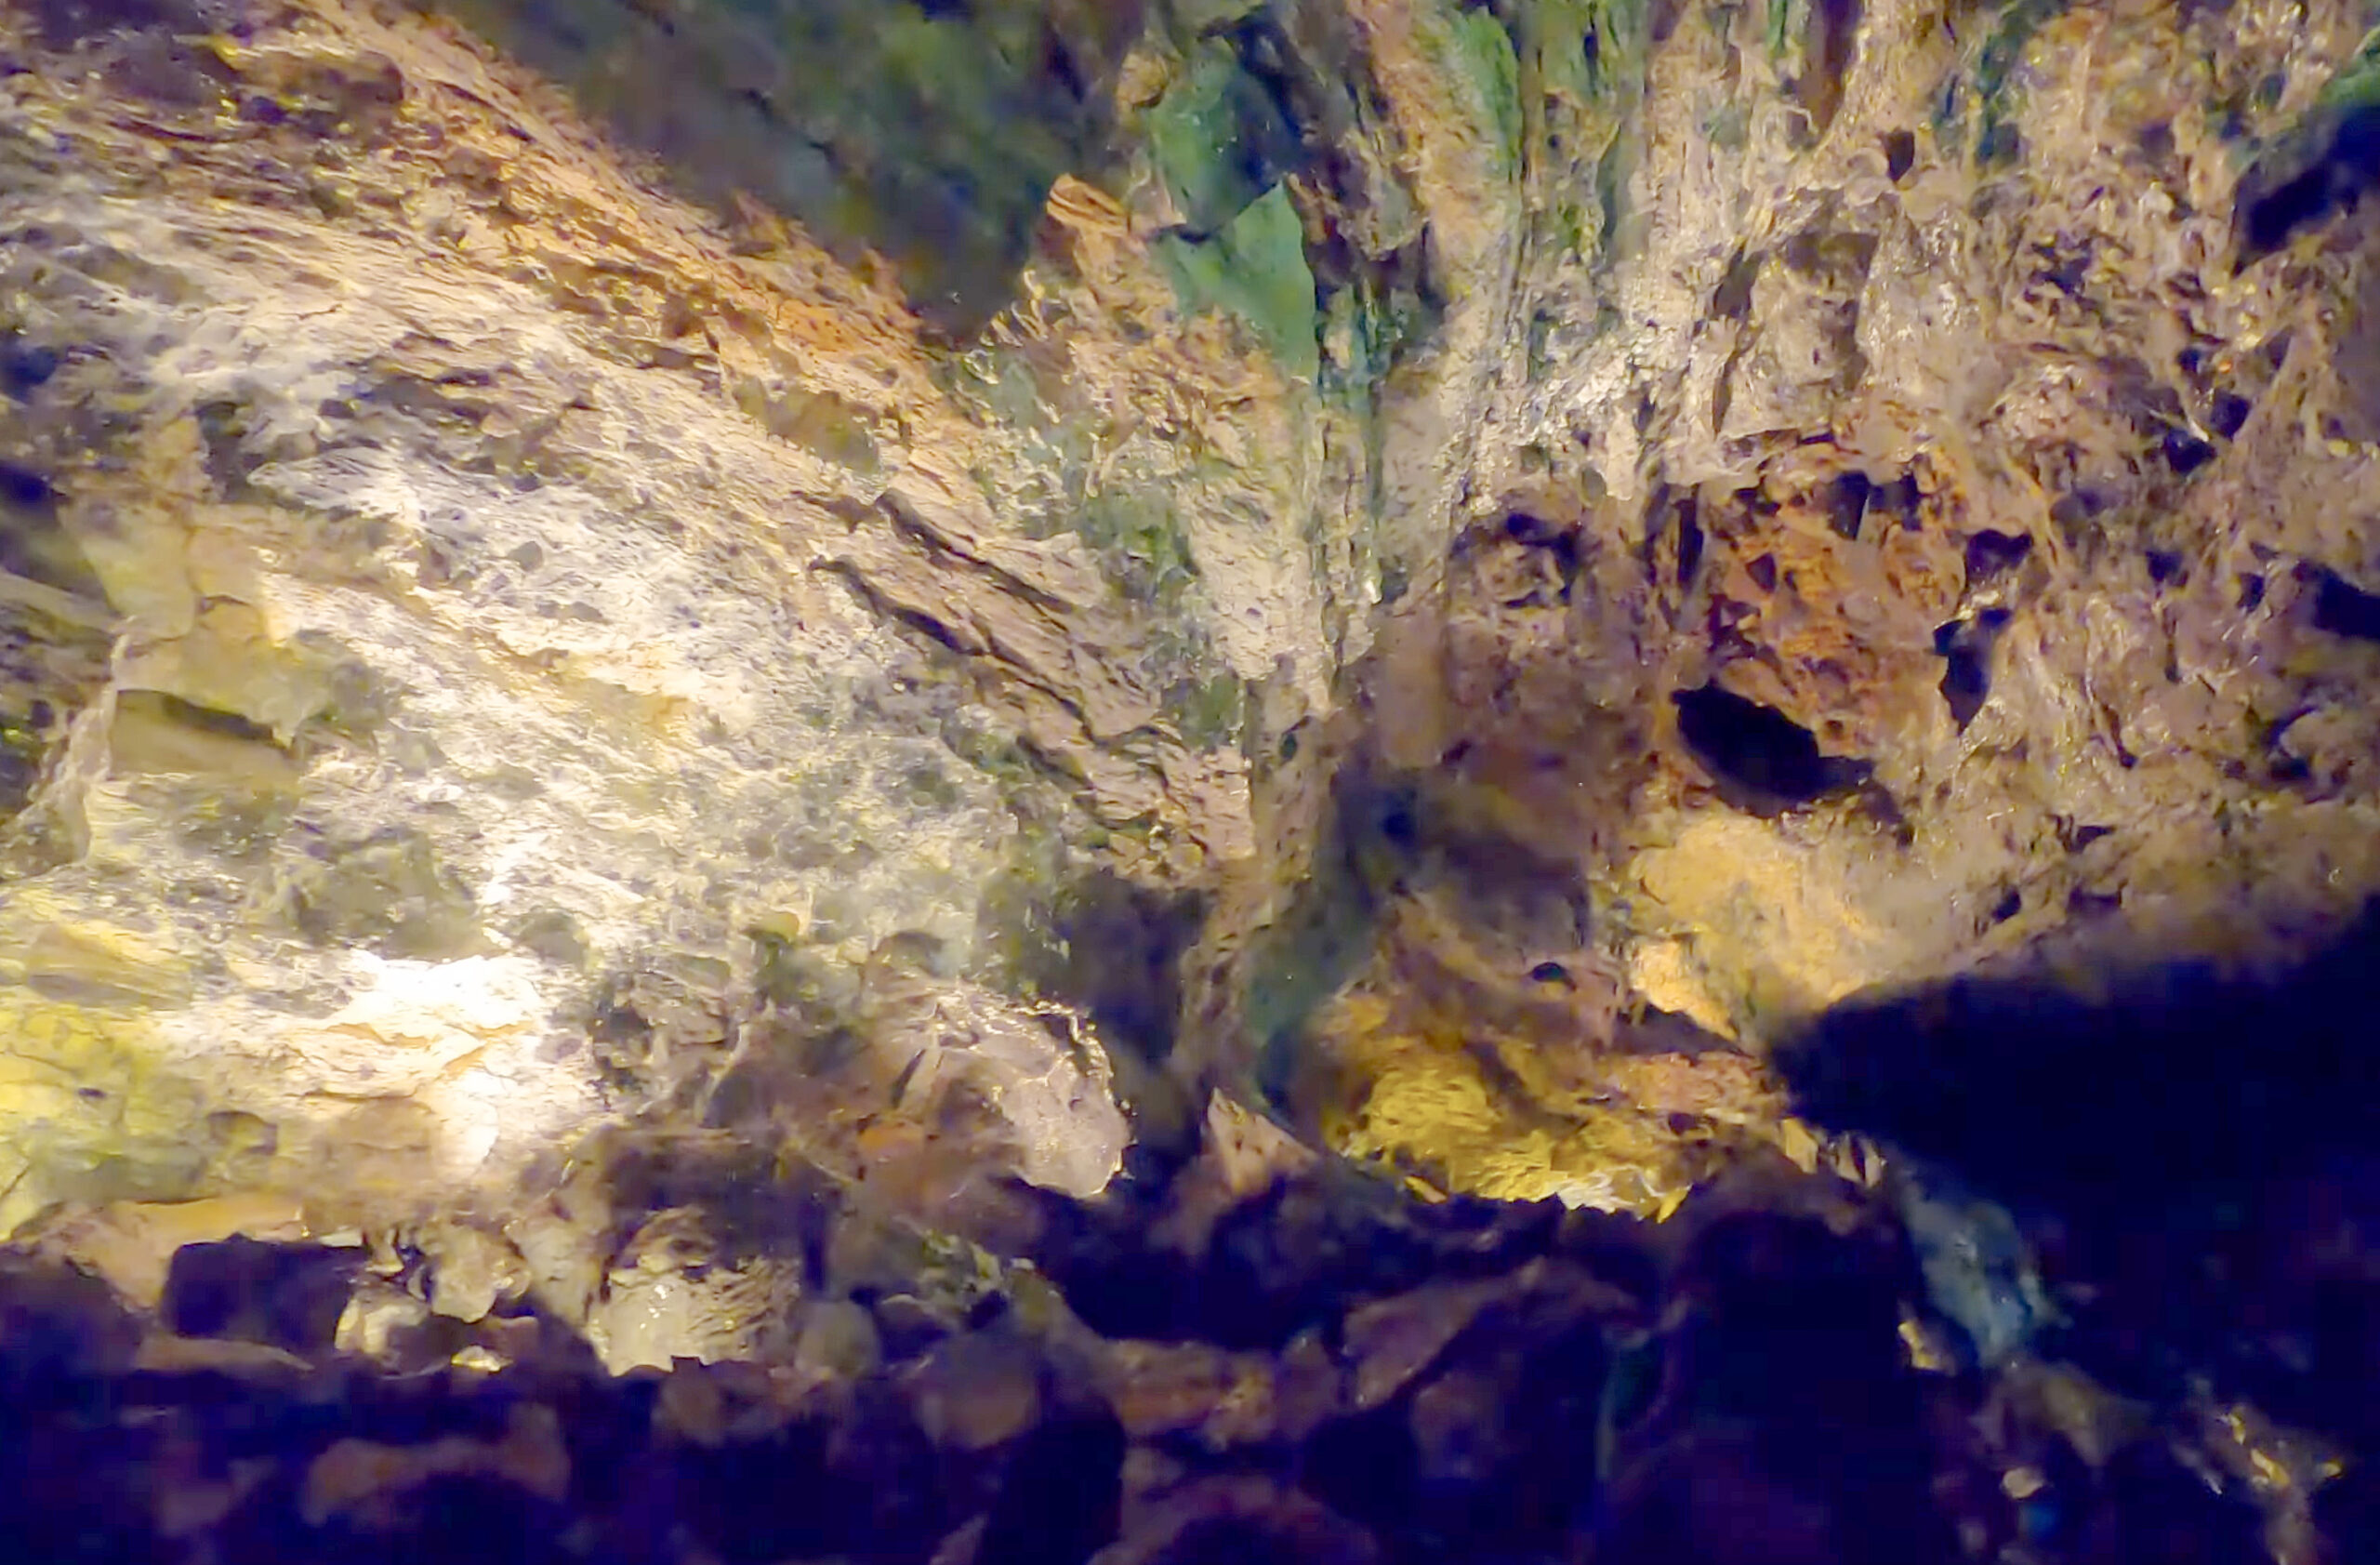 Cueva de los Verdes lava tube detail